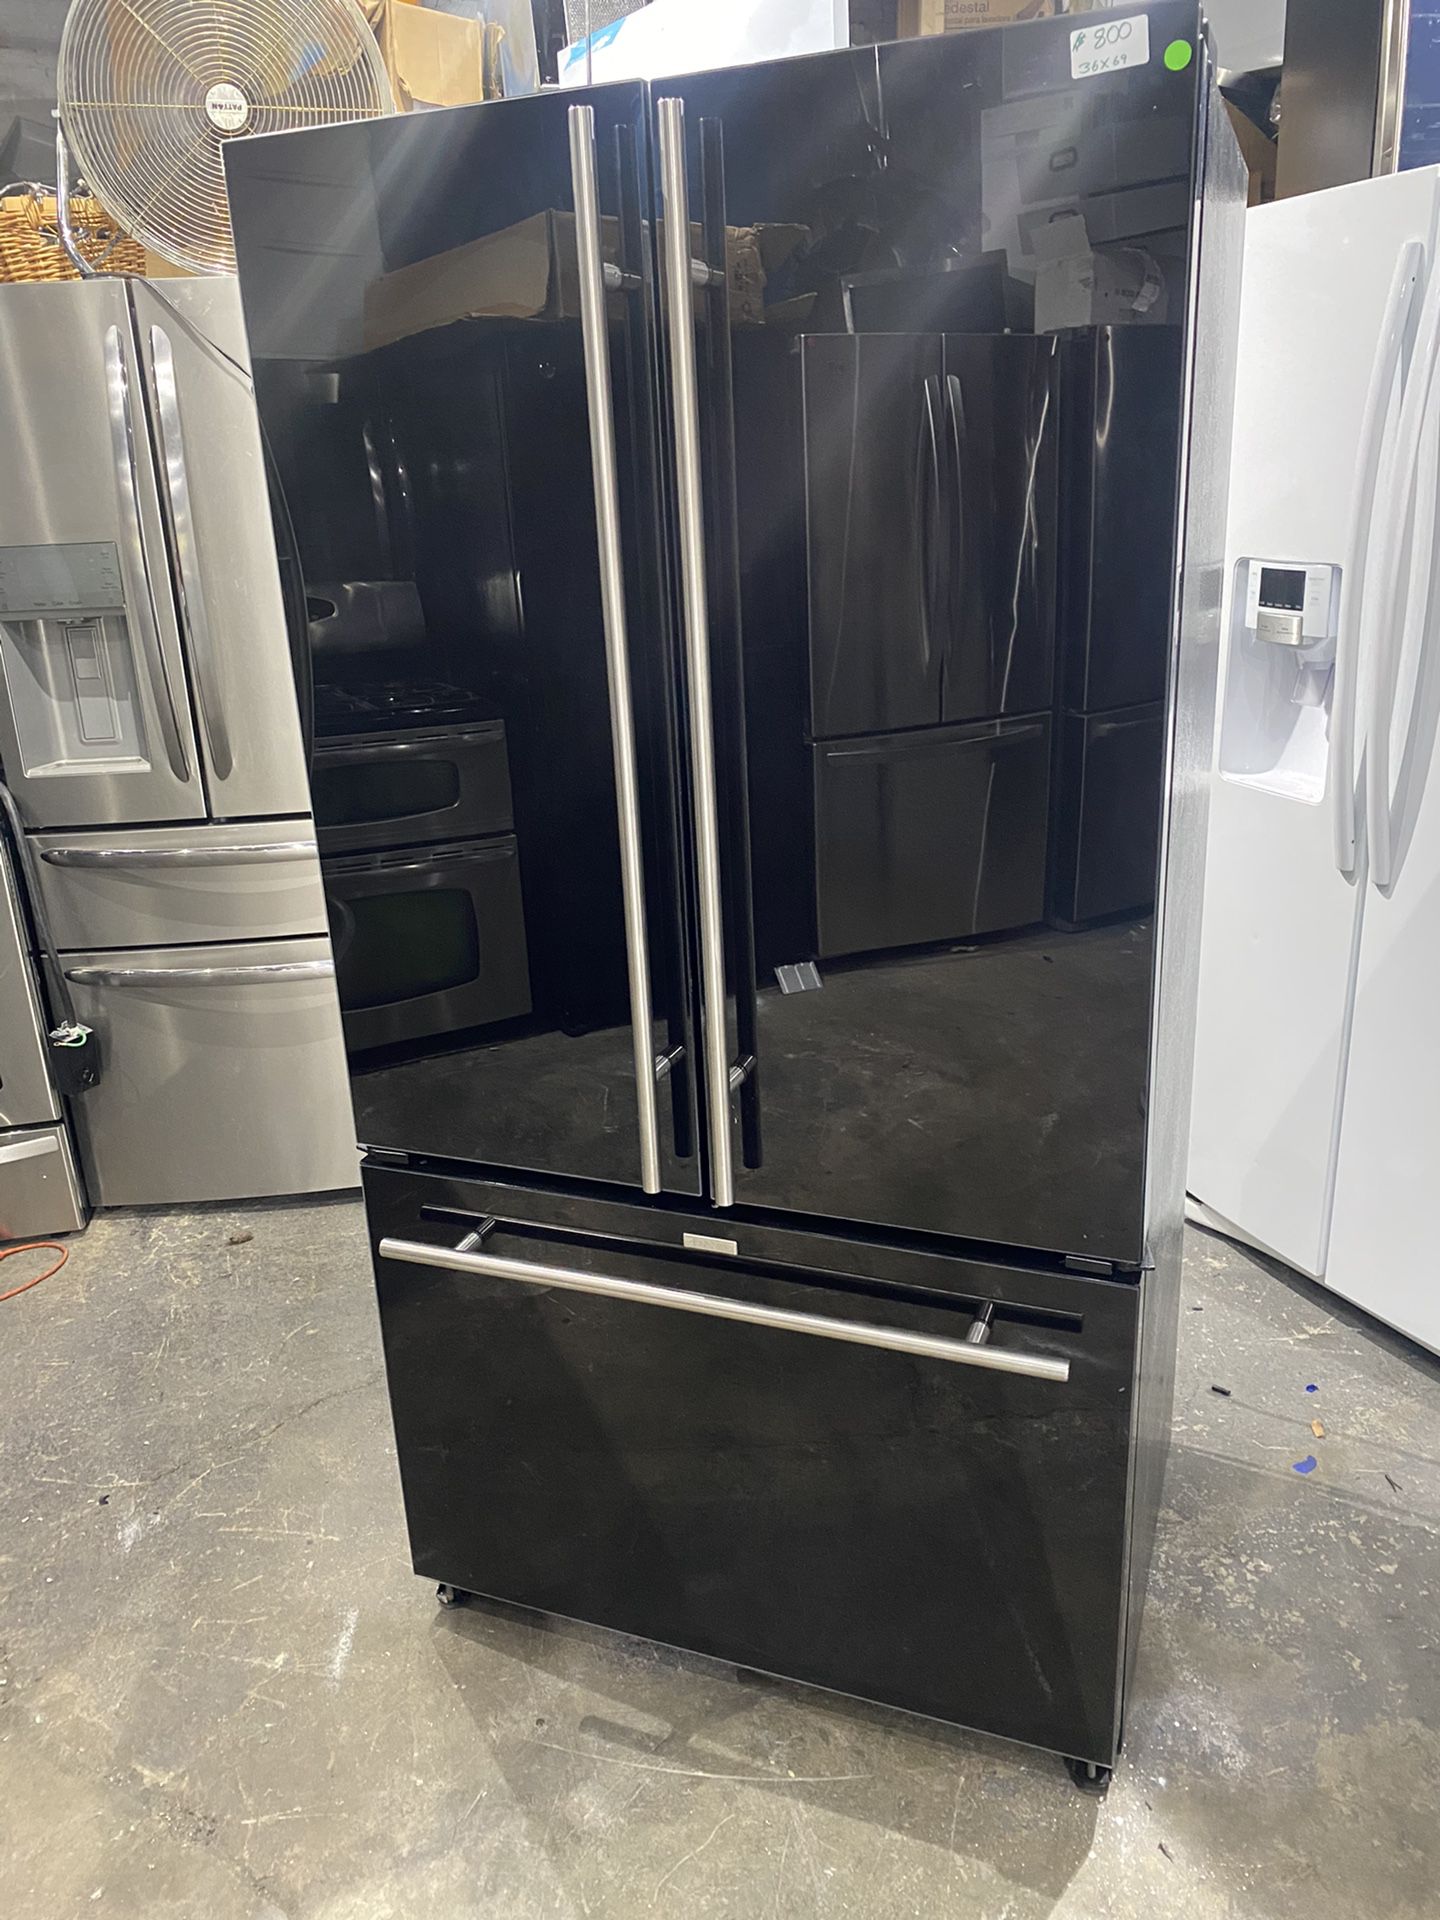 Jenn-air refrigerator 36 x 69 black glass works perfect clean one receipt for 60 days warranty